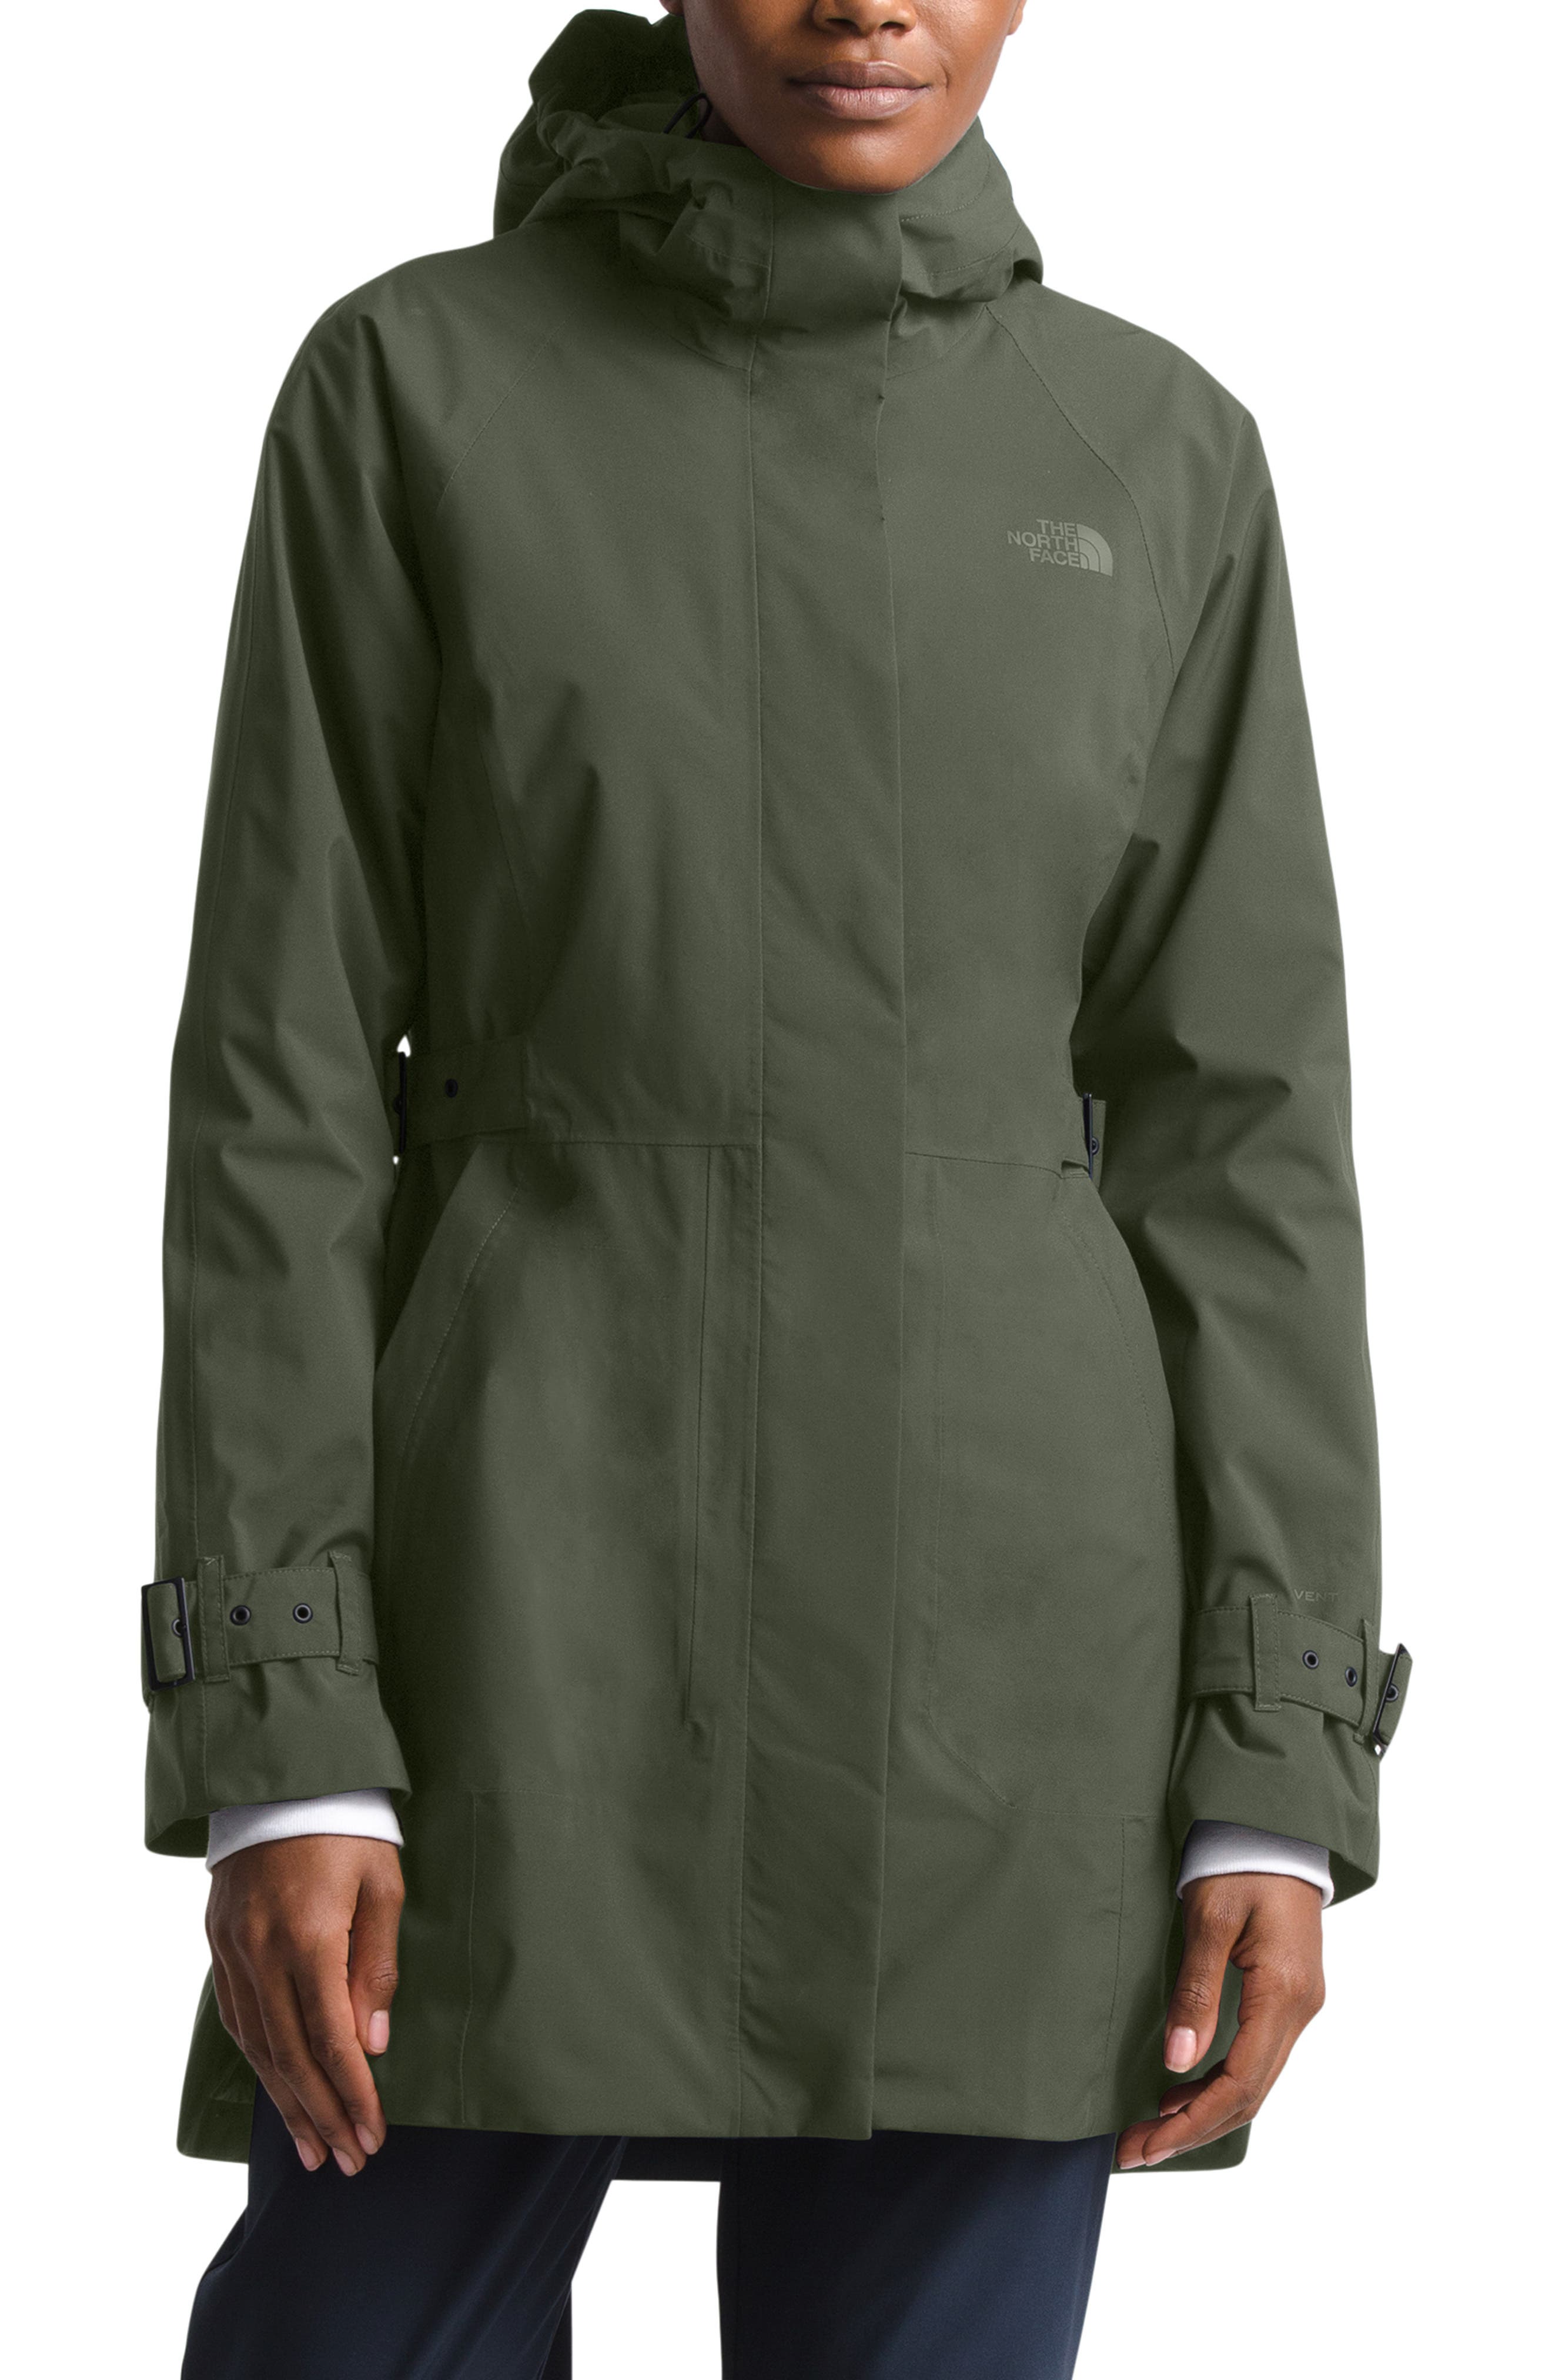 olive rain jacket women's